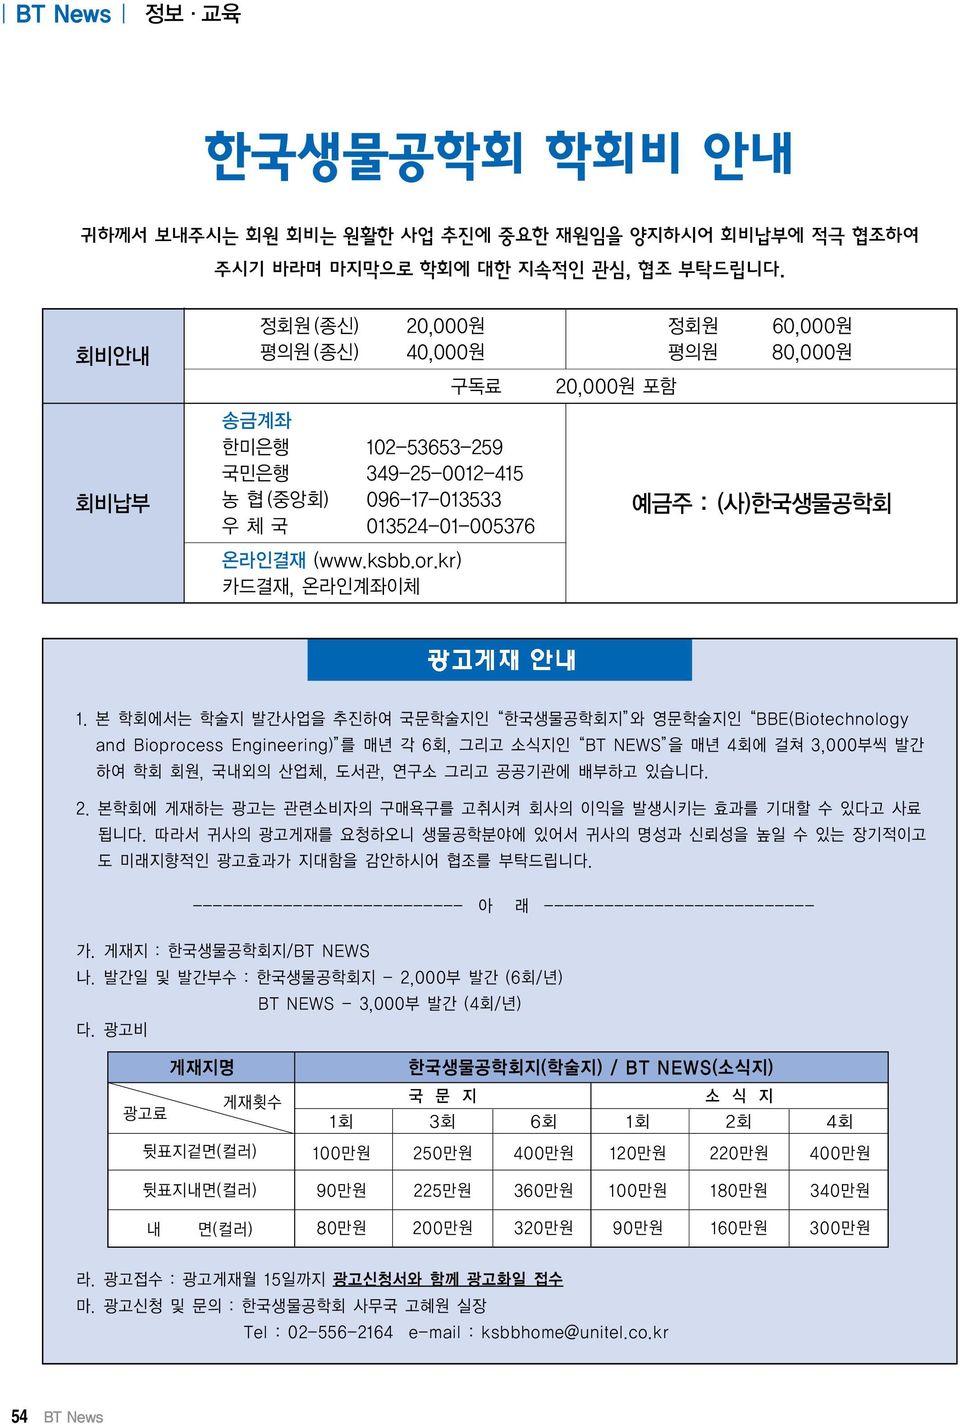 kr) 카드결재, 온라인계좌이체 예금주 : (사)한국생물공학회 1.